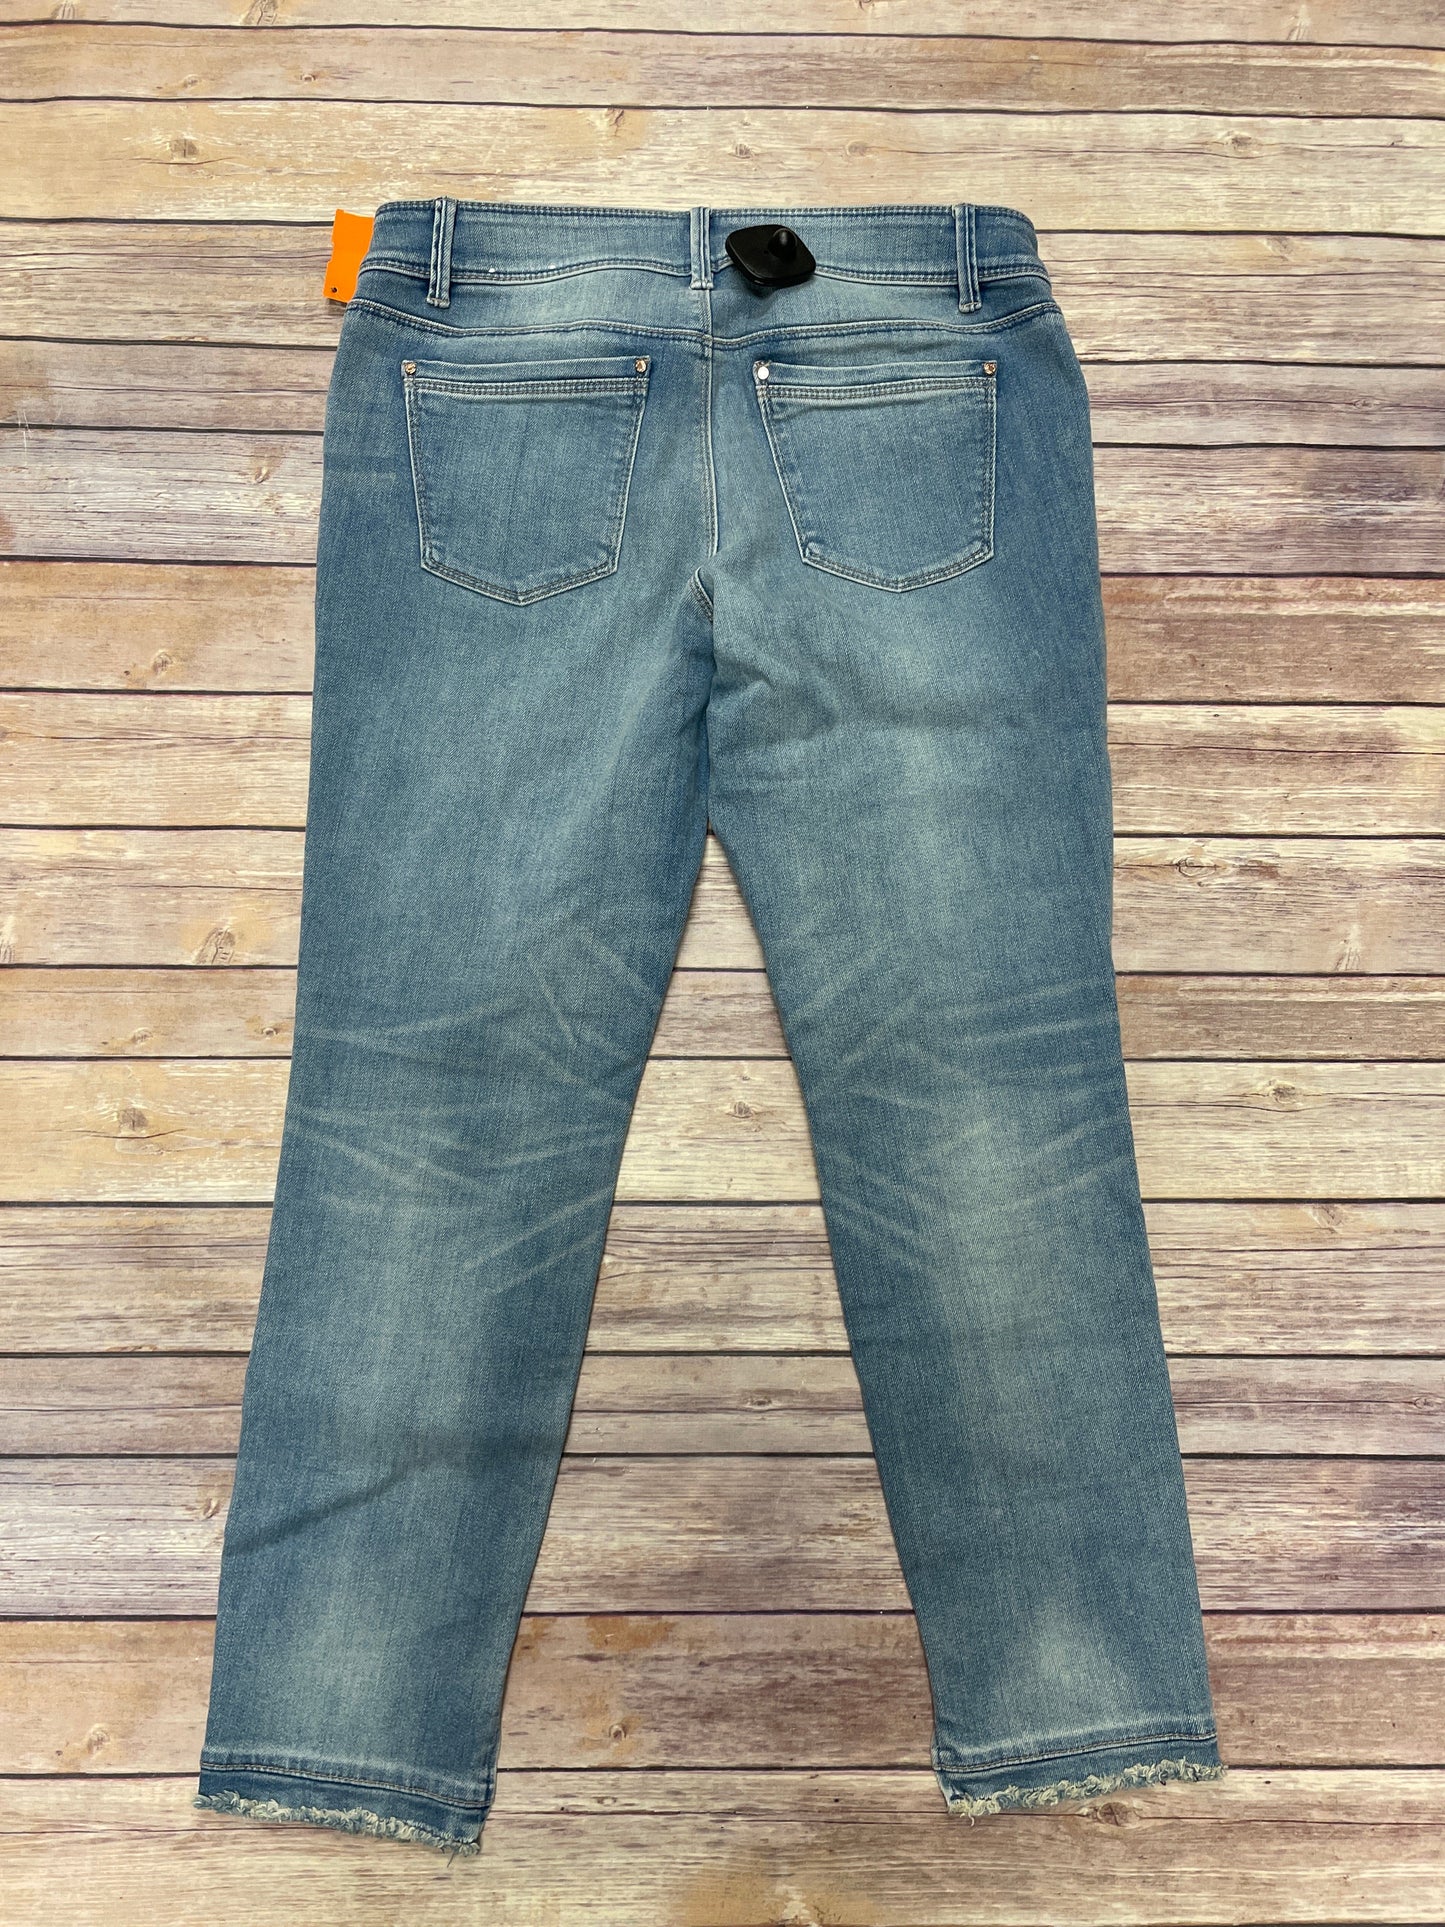 Jeans Skinny By White House Black Market  Size: 6petite